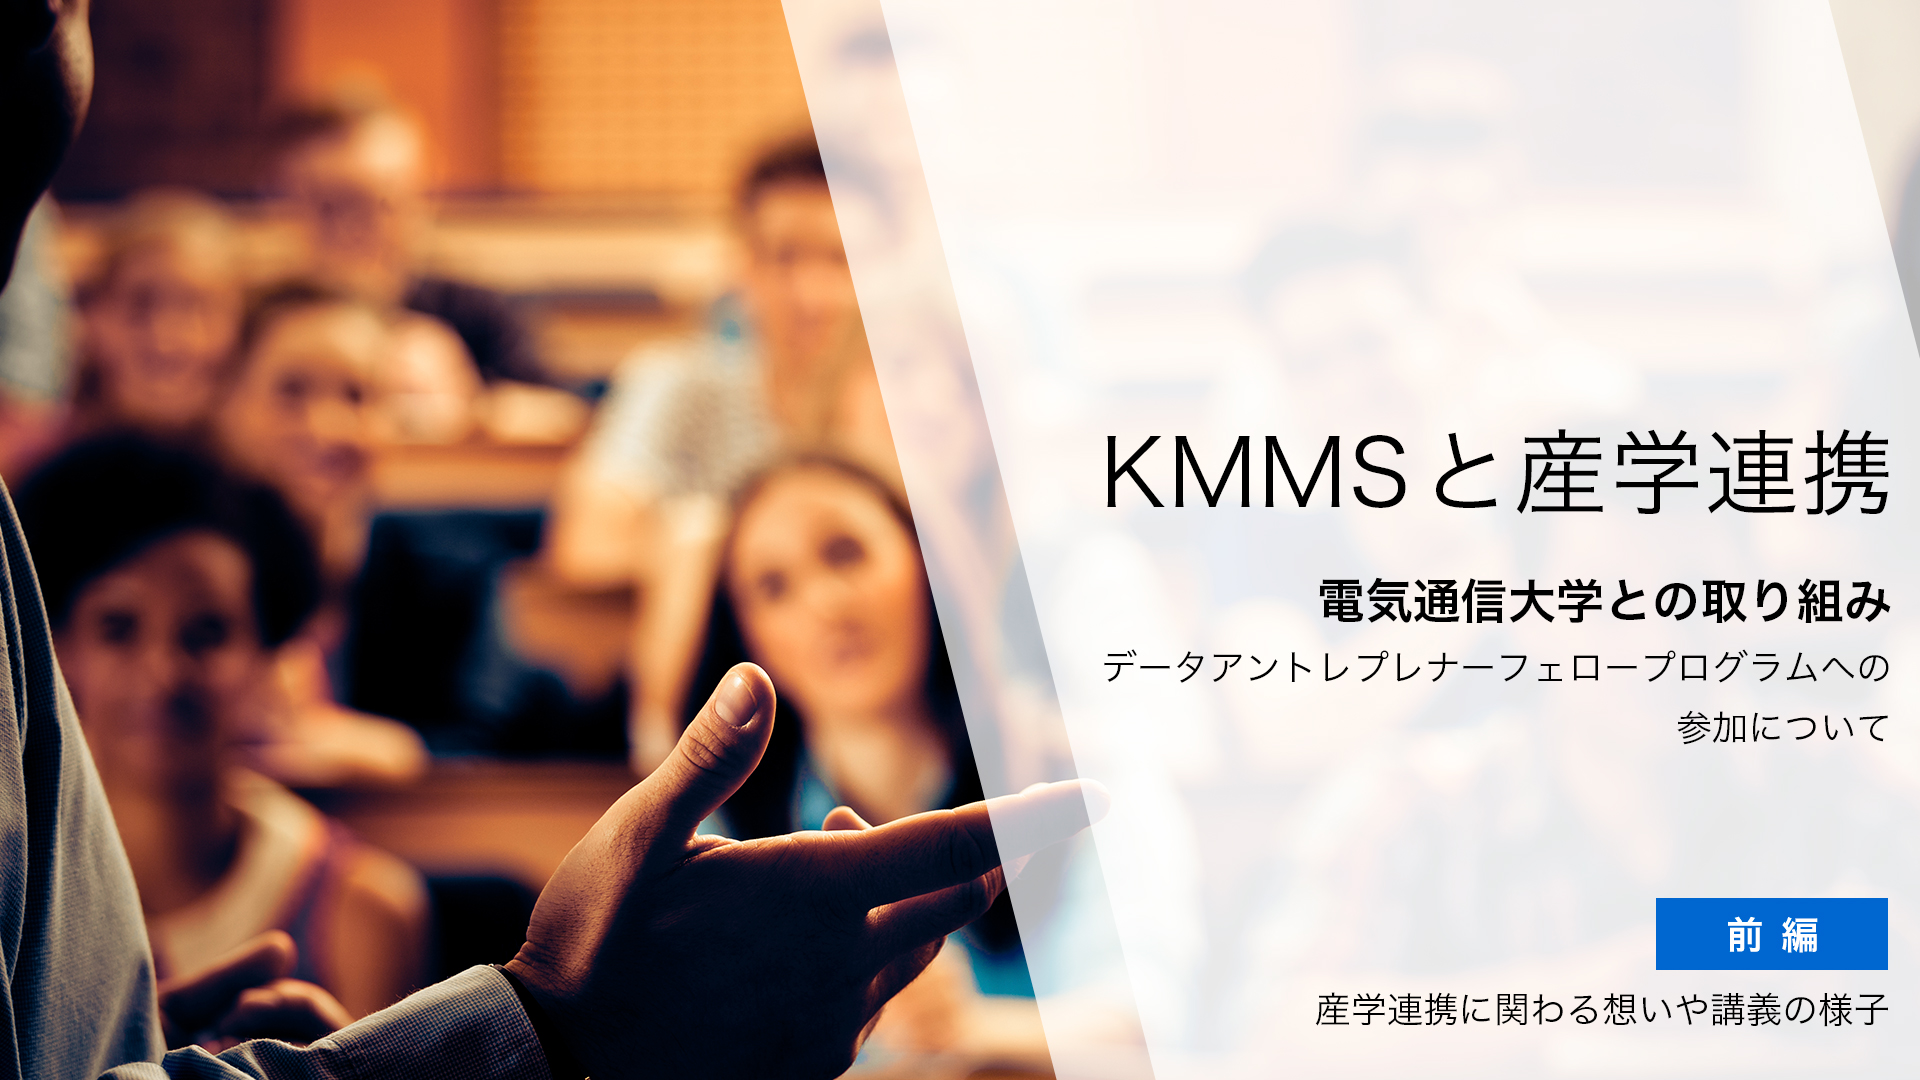 KMMSと産学連携【前編】産学連携に関わる想いや講義の様子